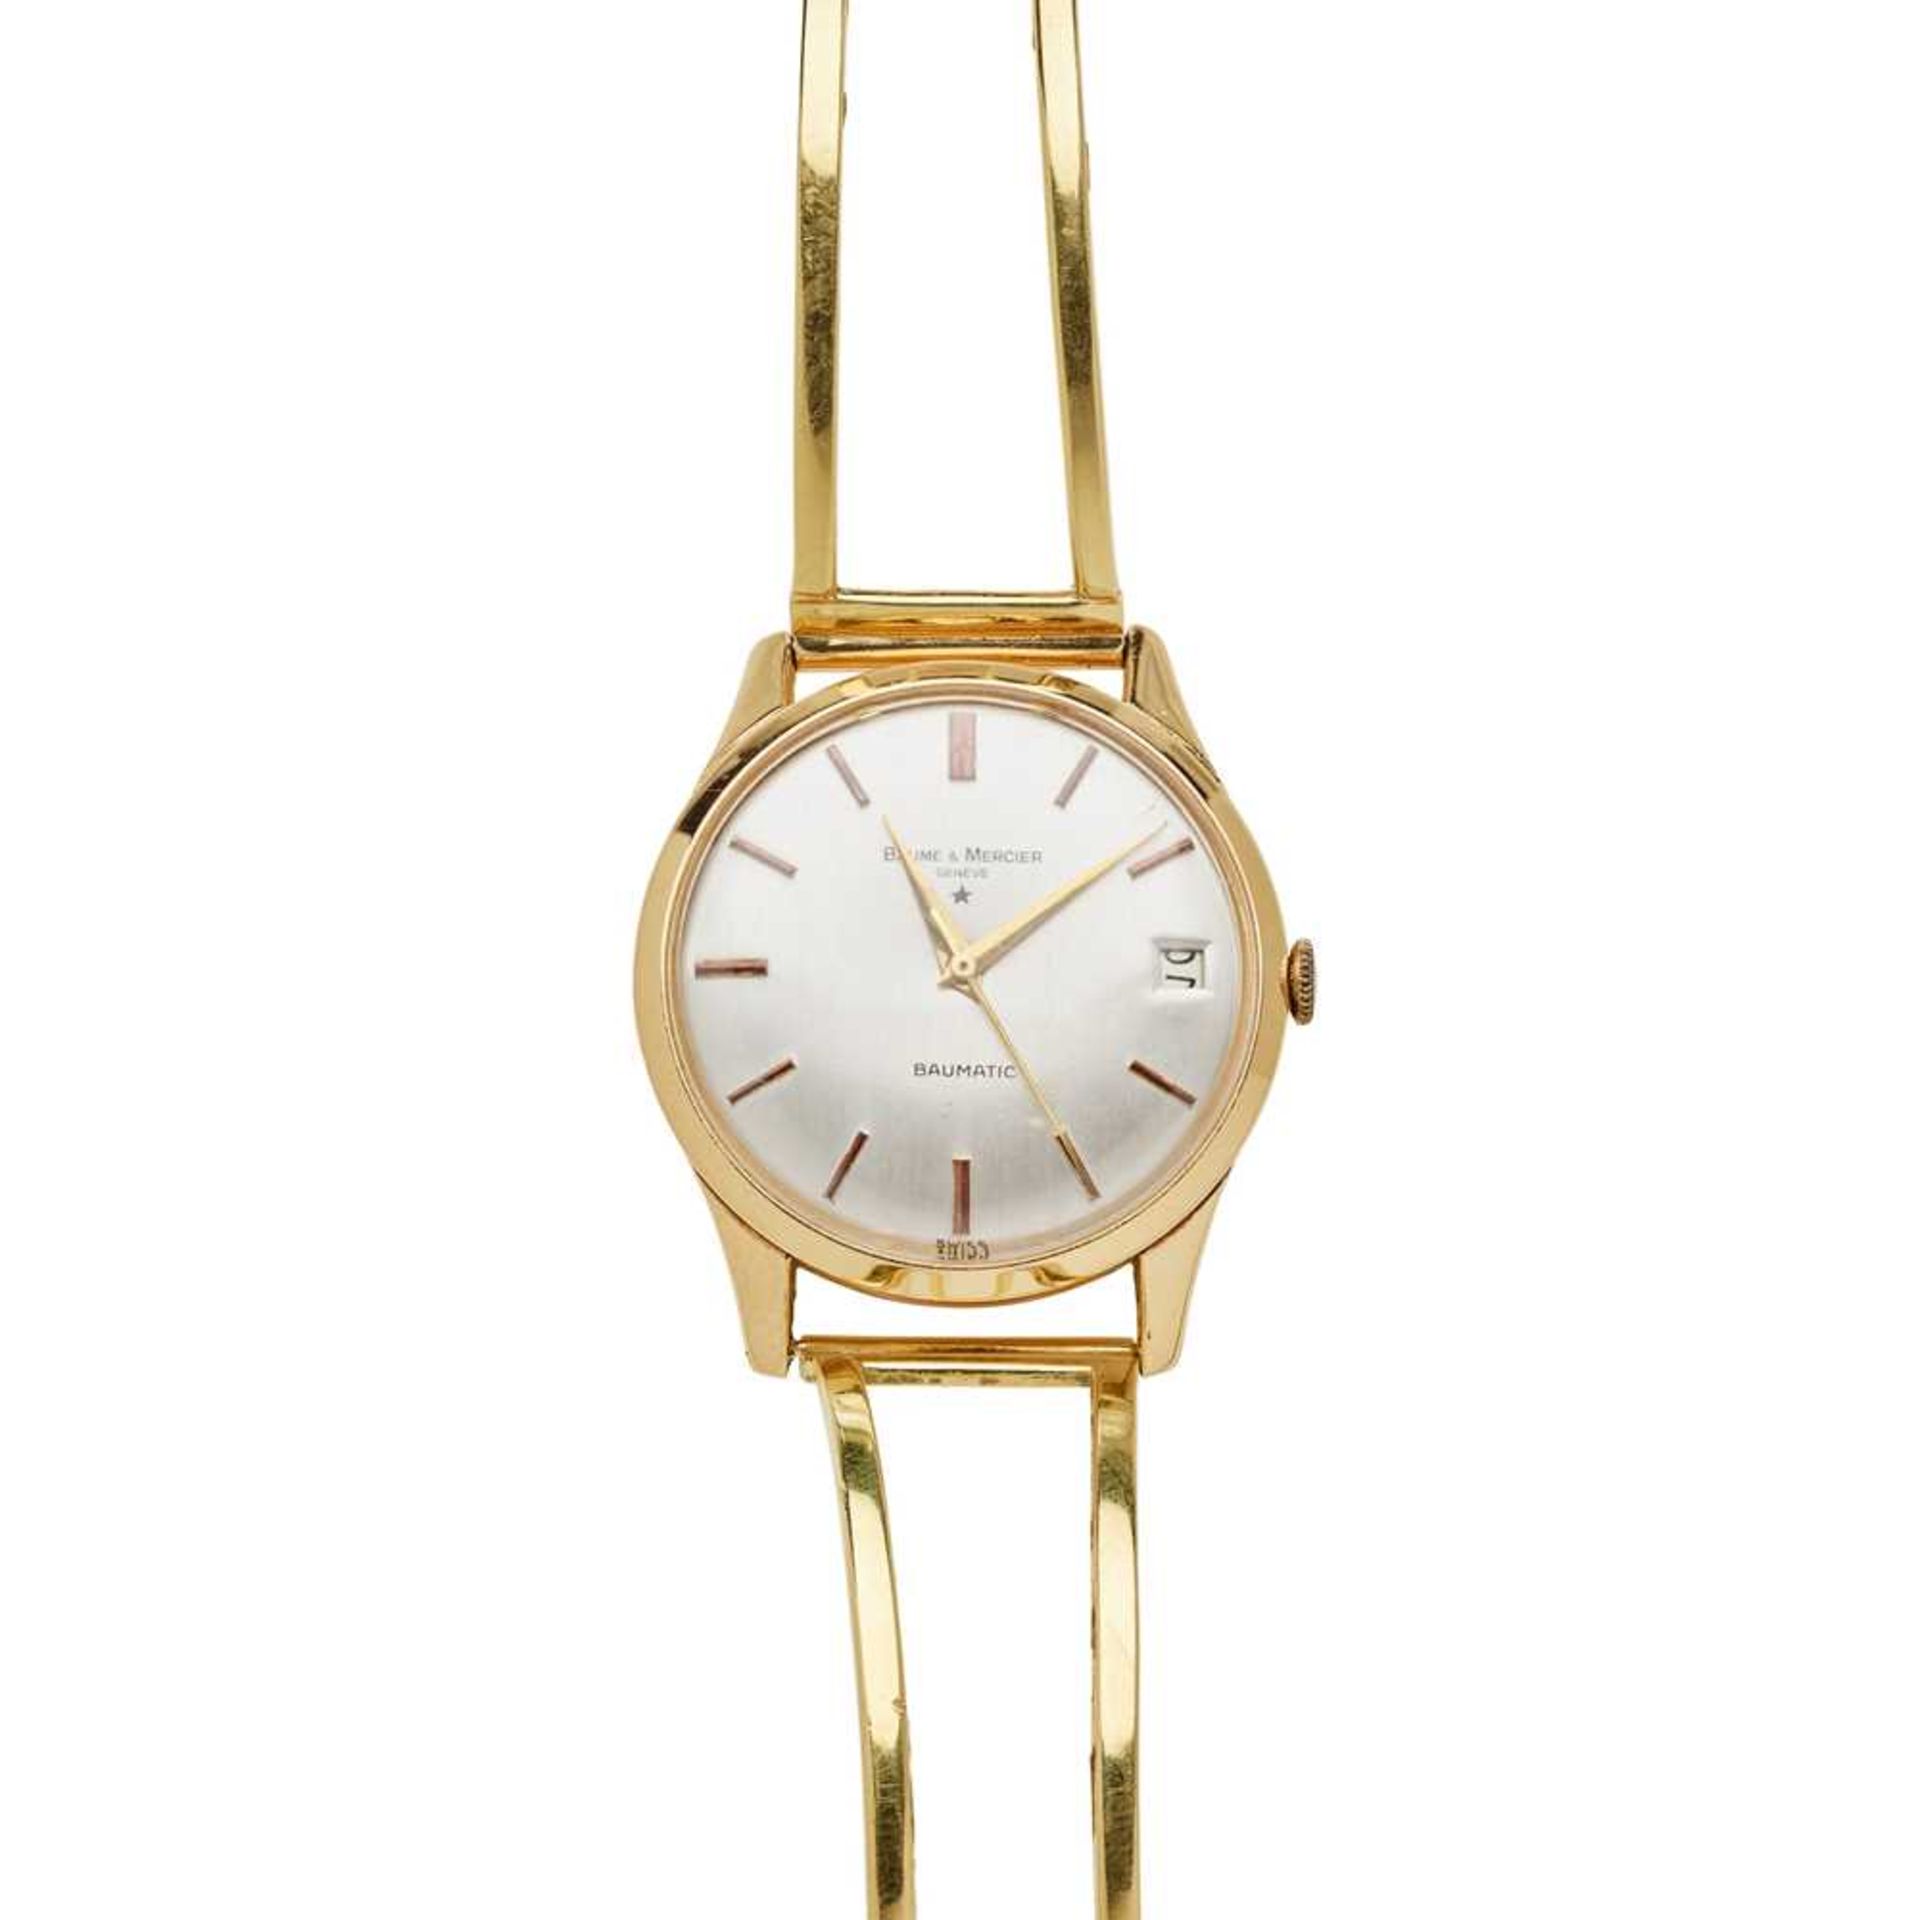 Baume & Mercier: a gold watch